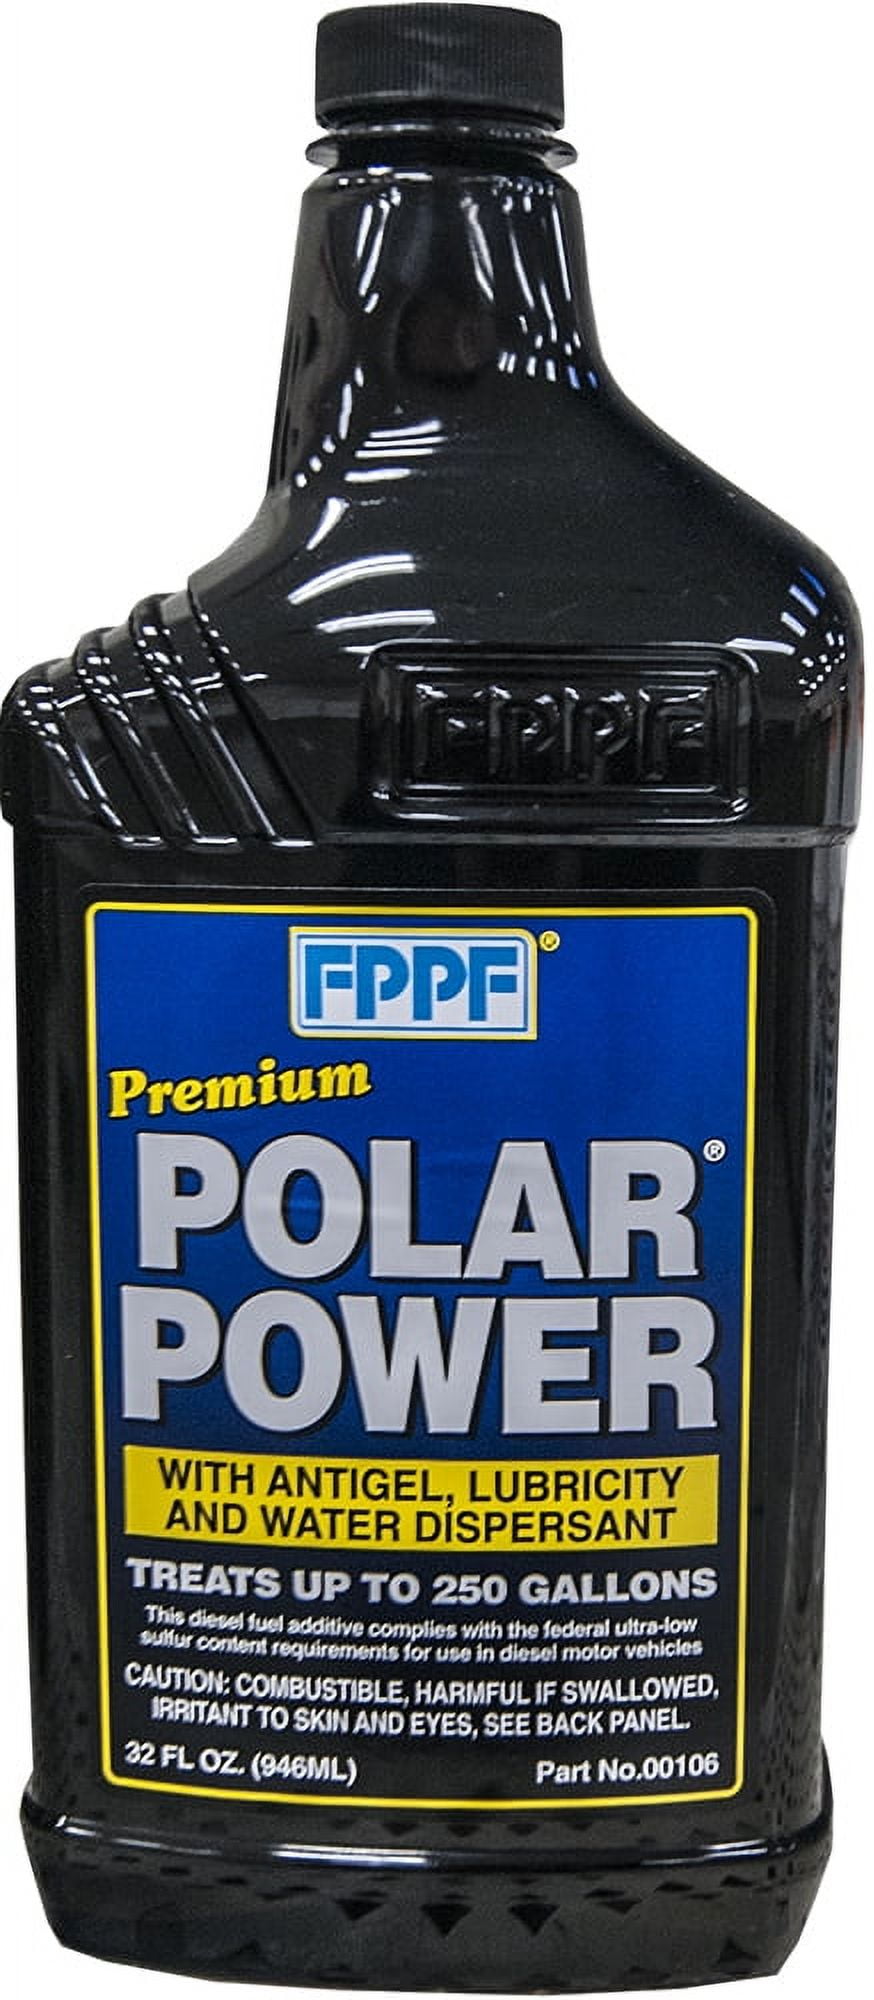 FPPF Polar Power Diesel Fuel Additive - 12/32 Oz. - Yoder Oil